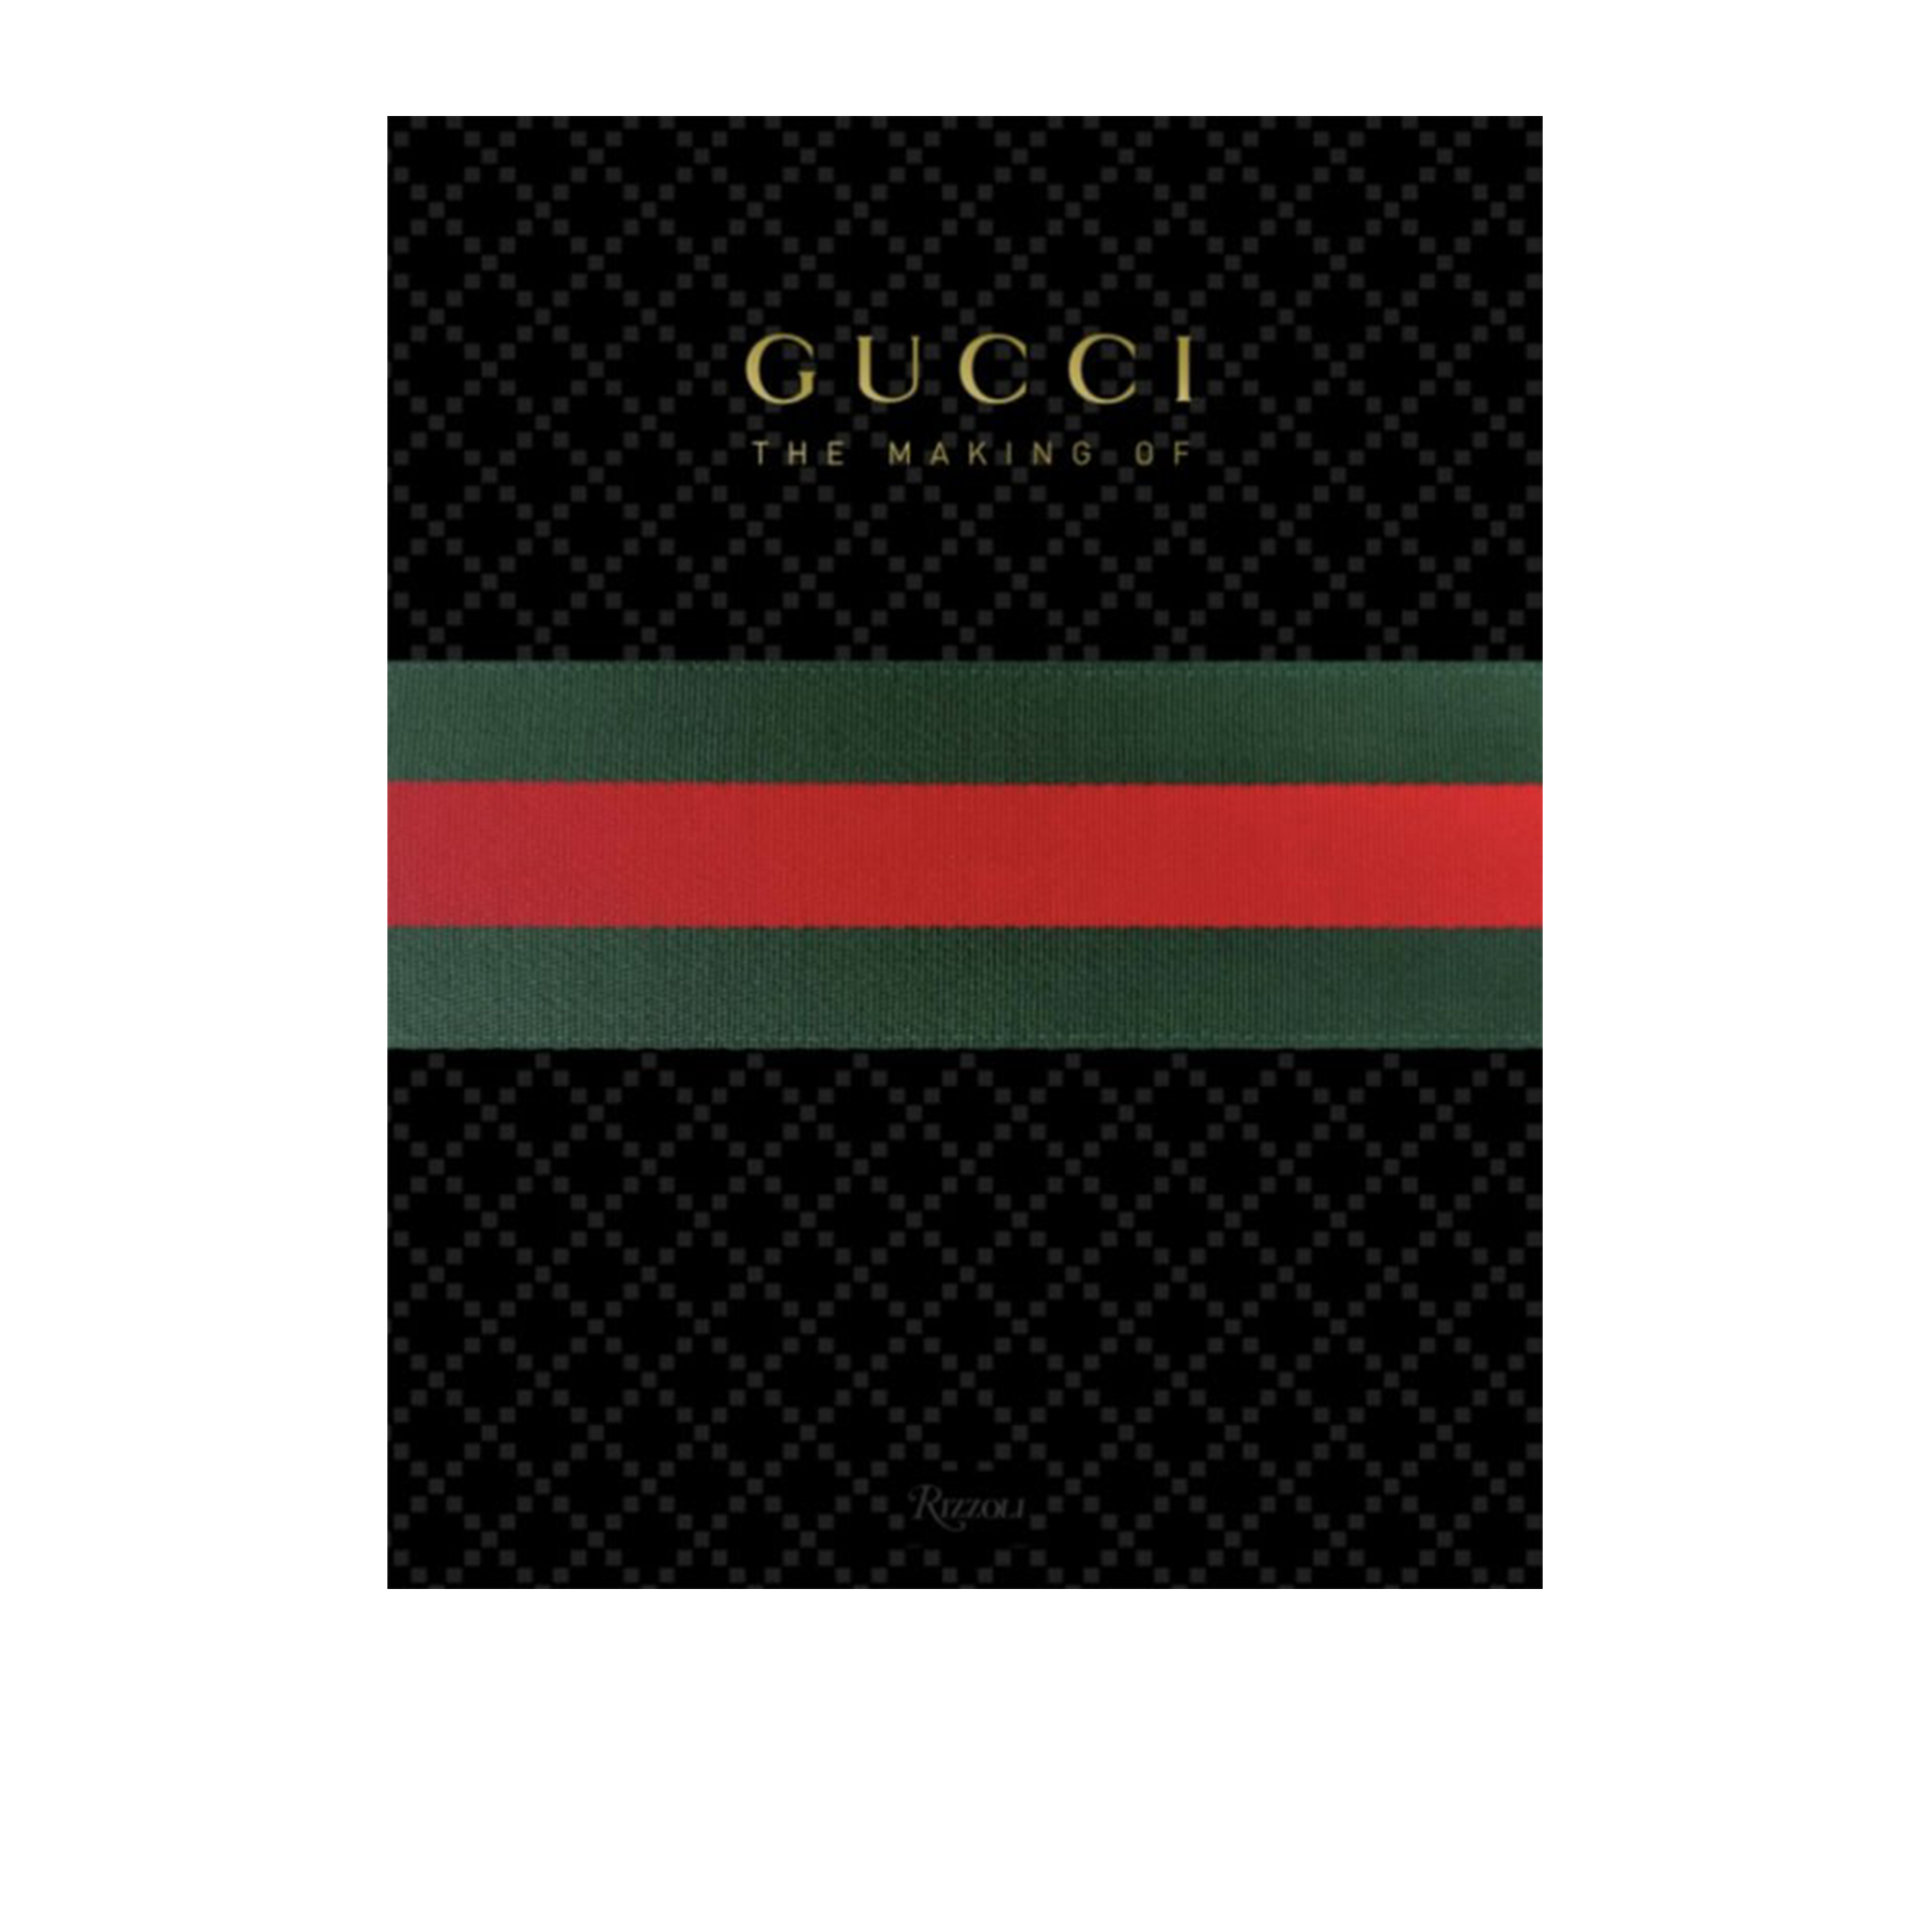 Gucci Coffee Table Book